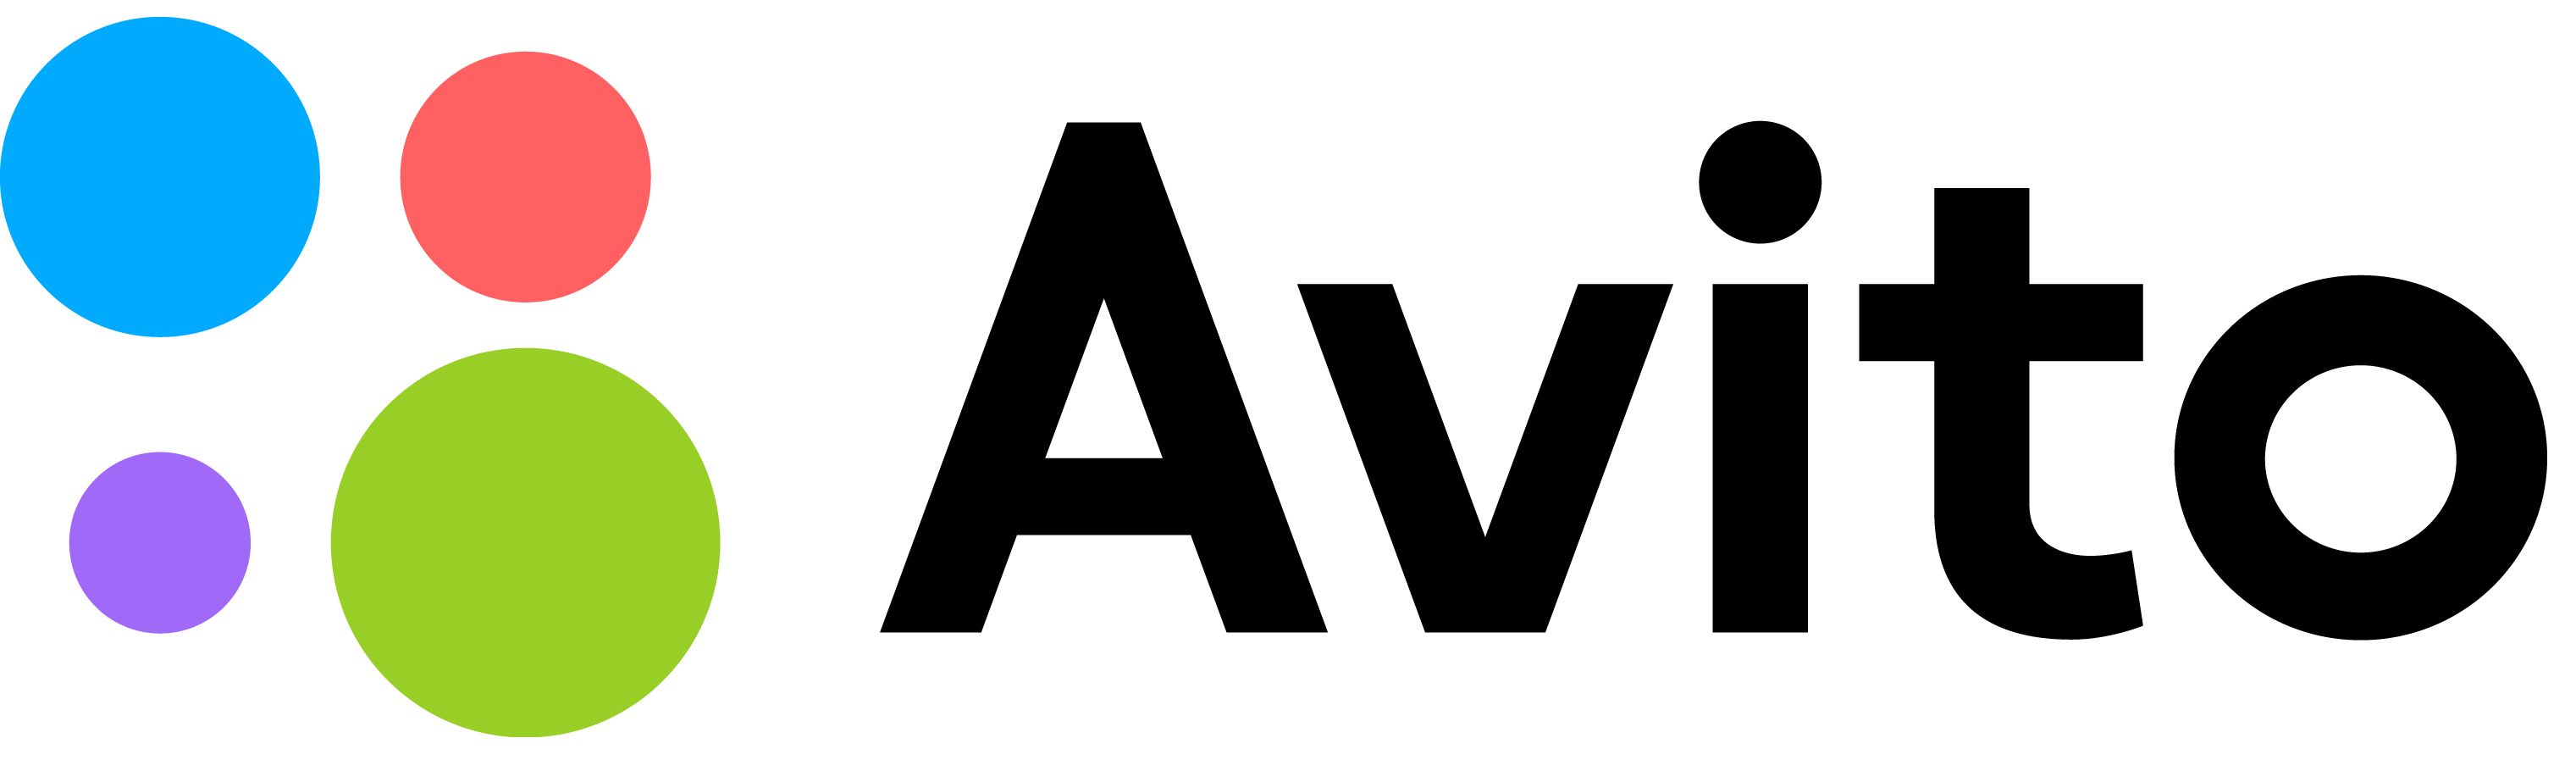 Www пр ru. Avito логотип. Логотип авито на прозрачном фоне. Авито маркетплейс. Авито картинка.